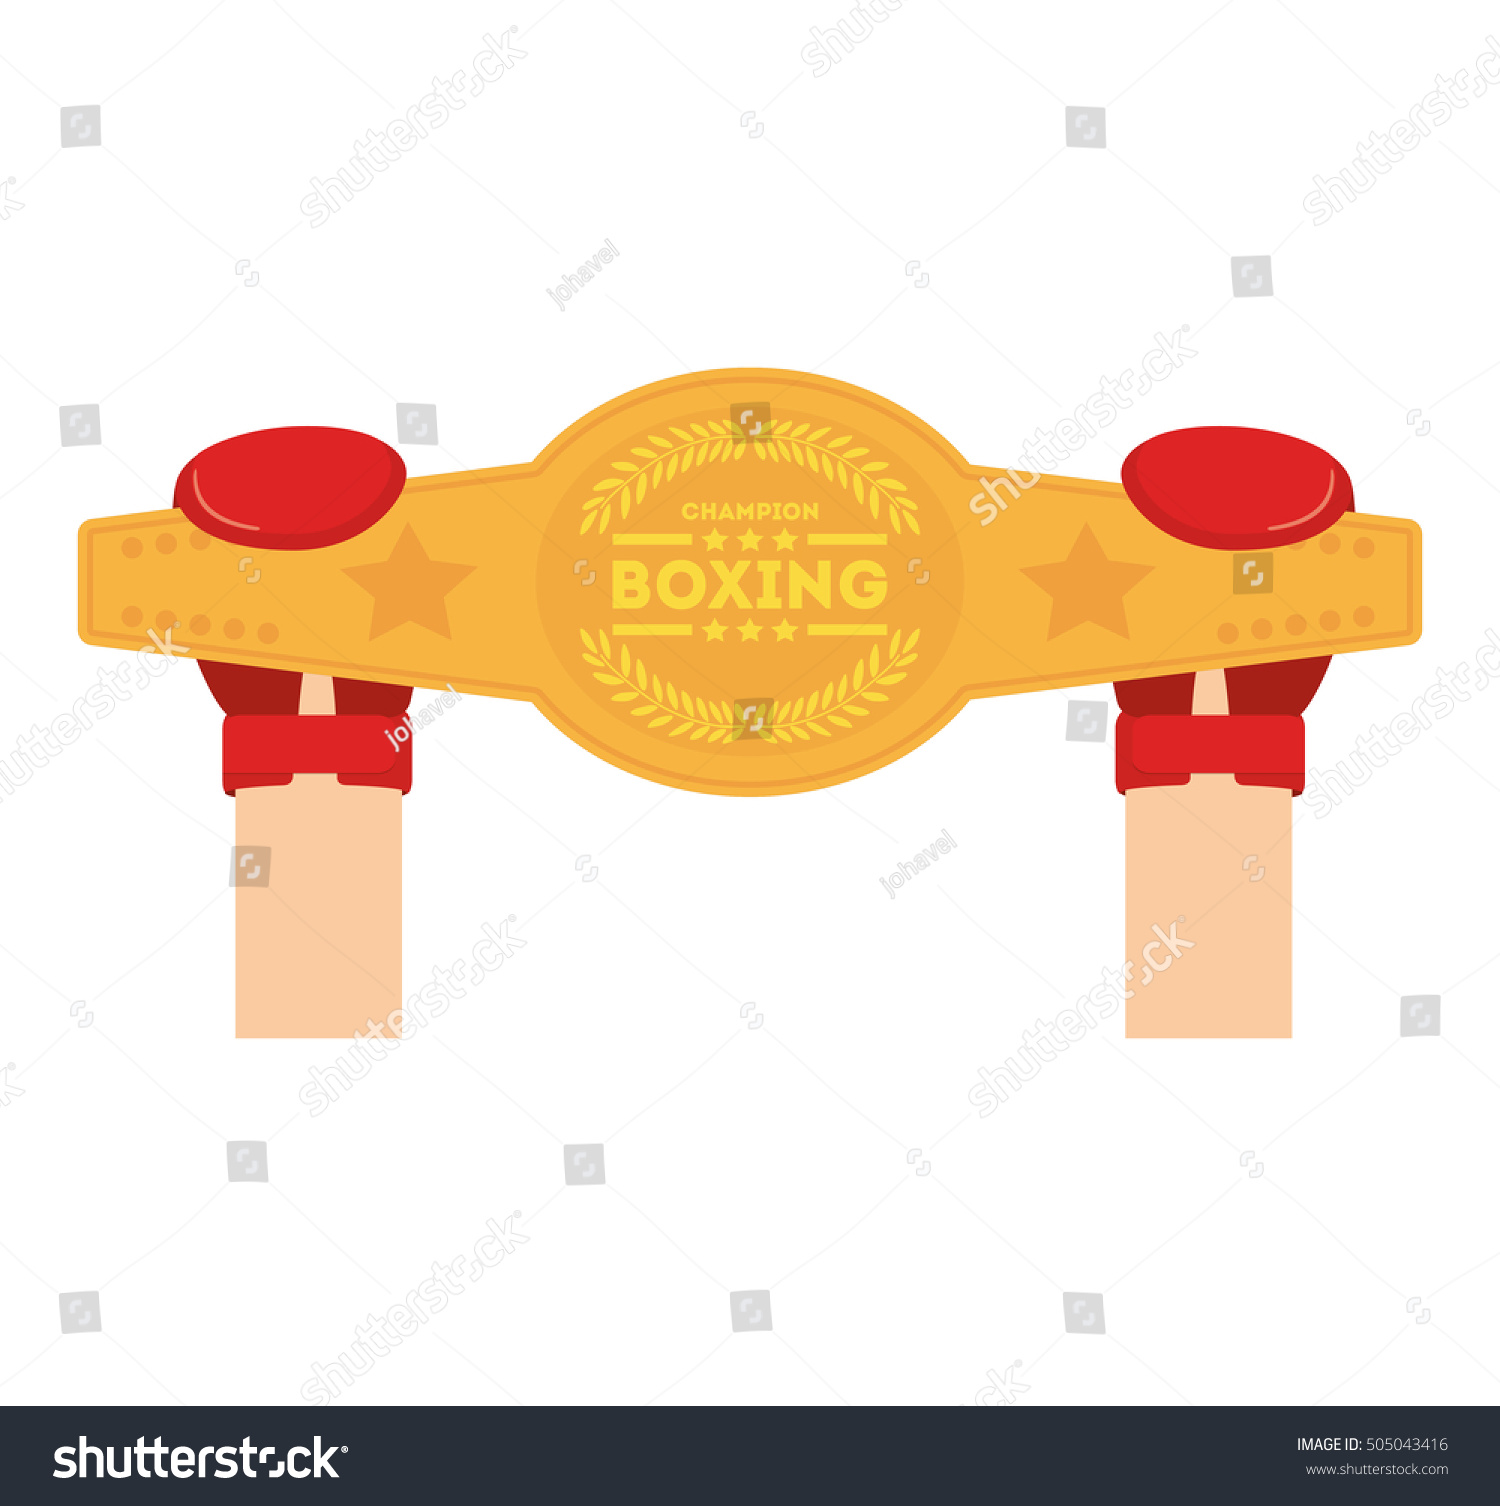 SVG of boxing championship belt isolated icon vector illustration design svg